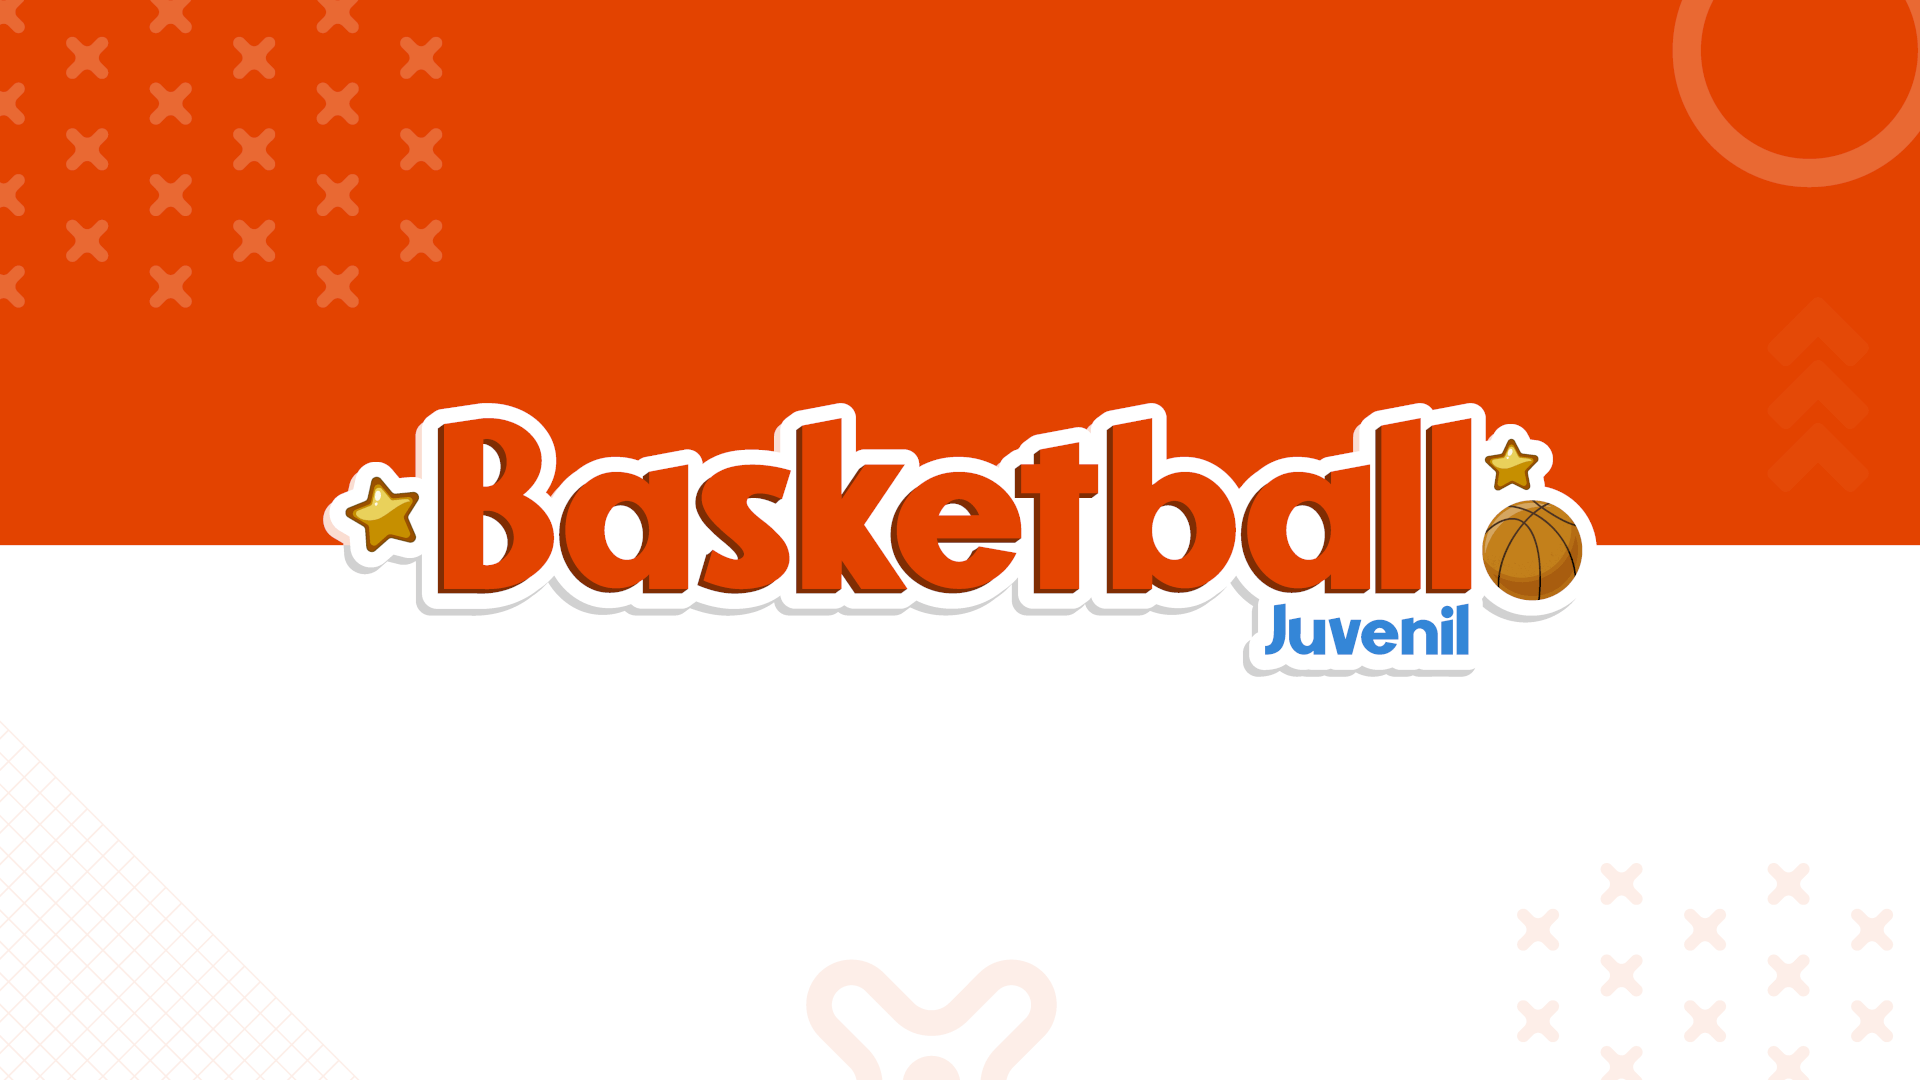 Basketball-juvenil